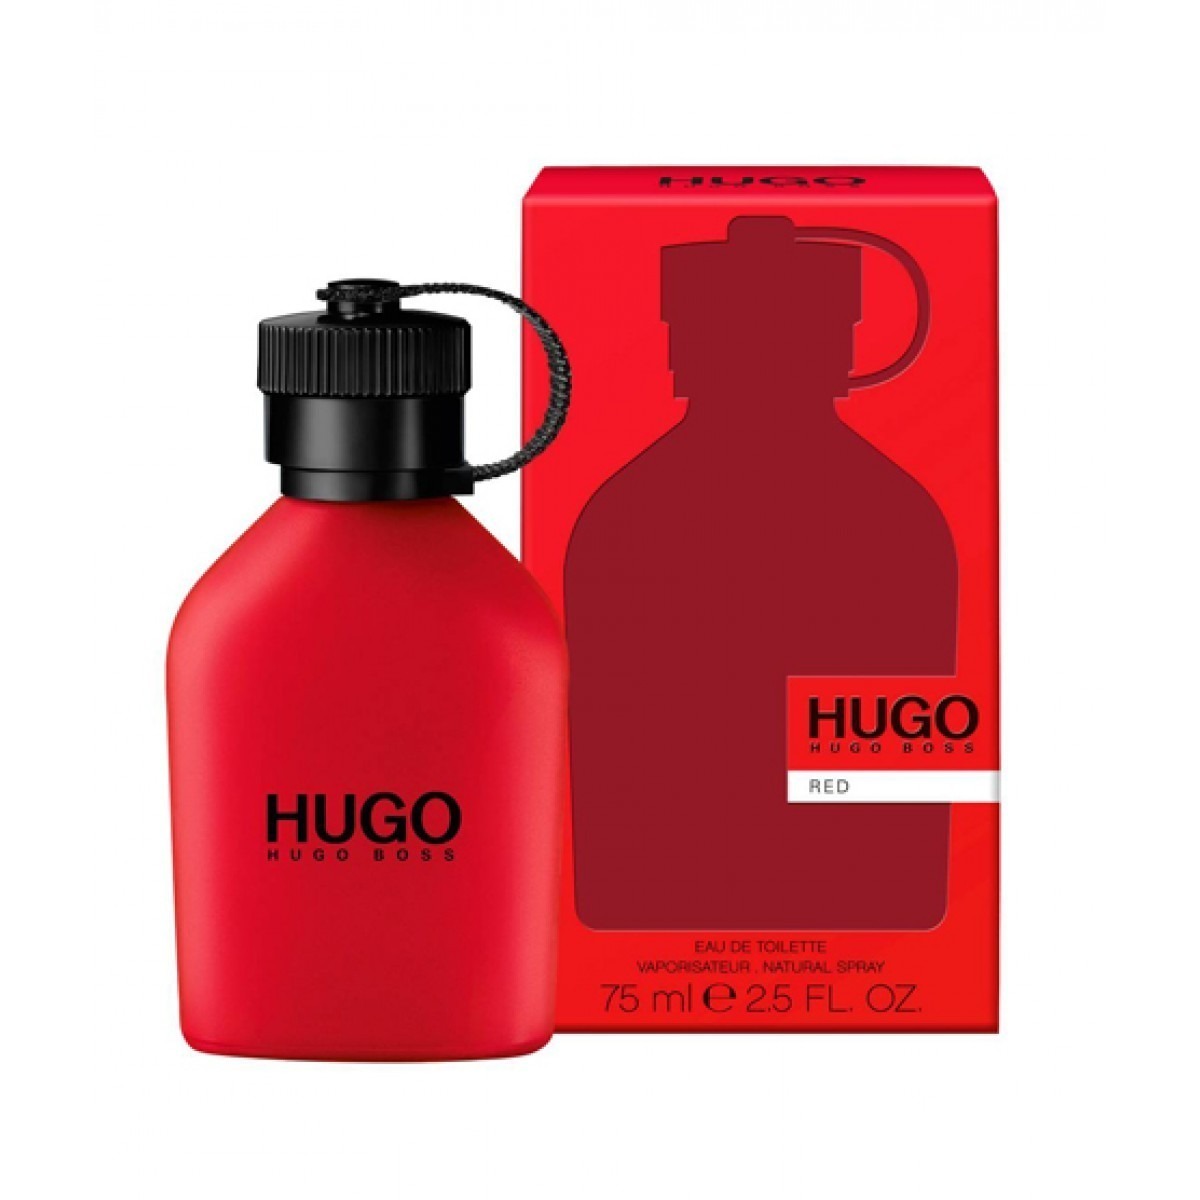 top hugo boss perfume